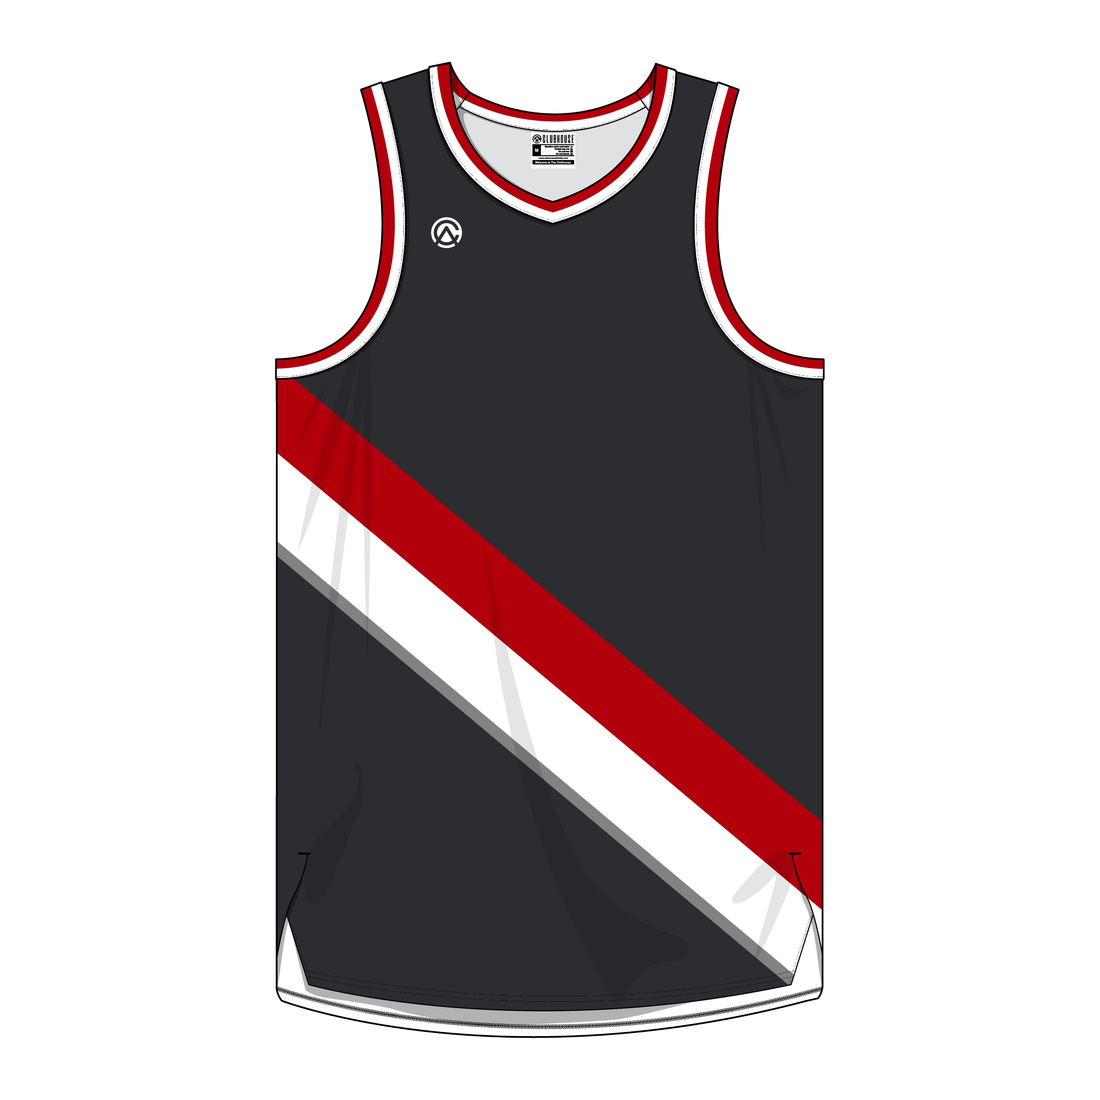 Clubhouse Original: Portland Basketball Jersey